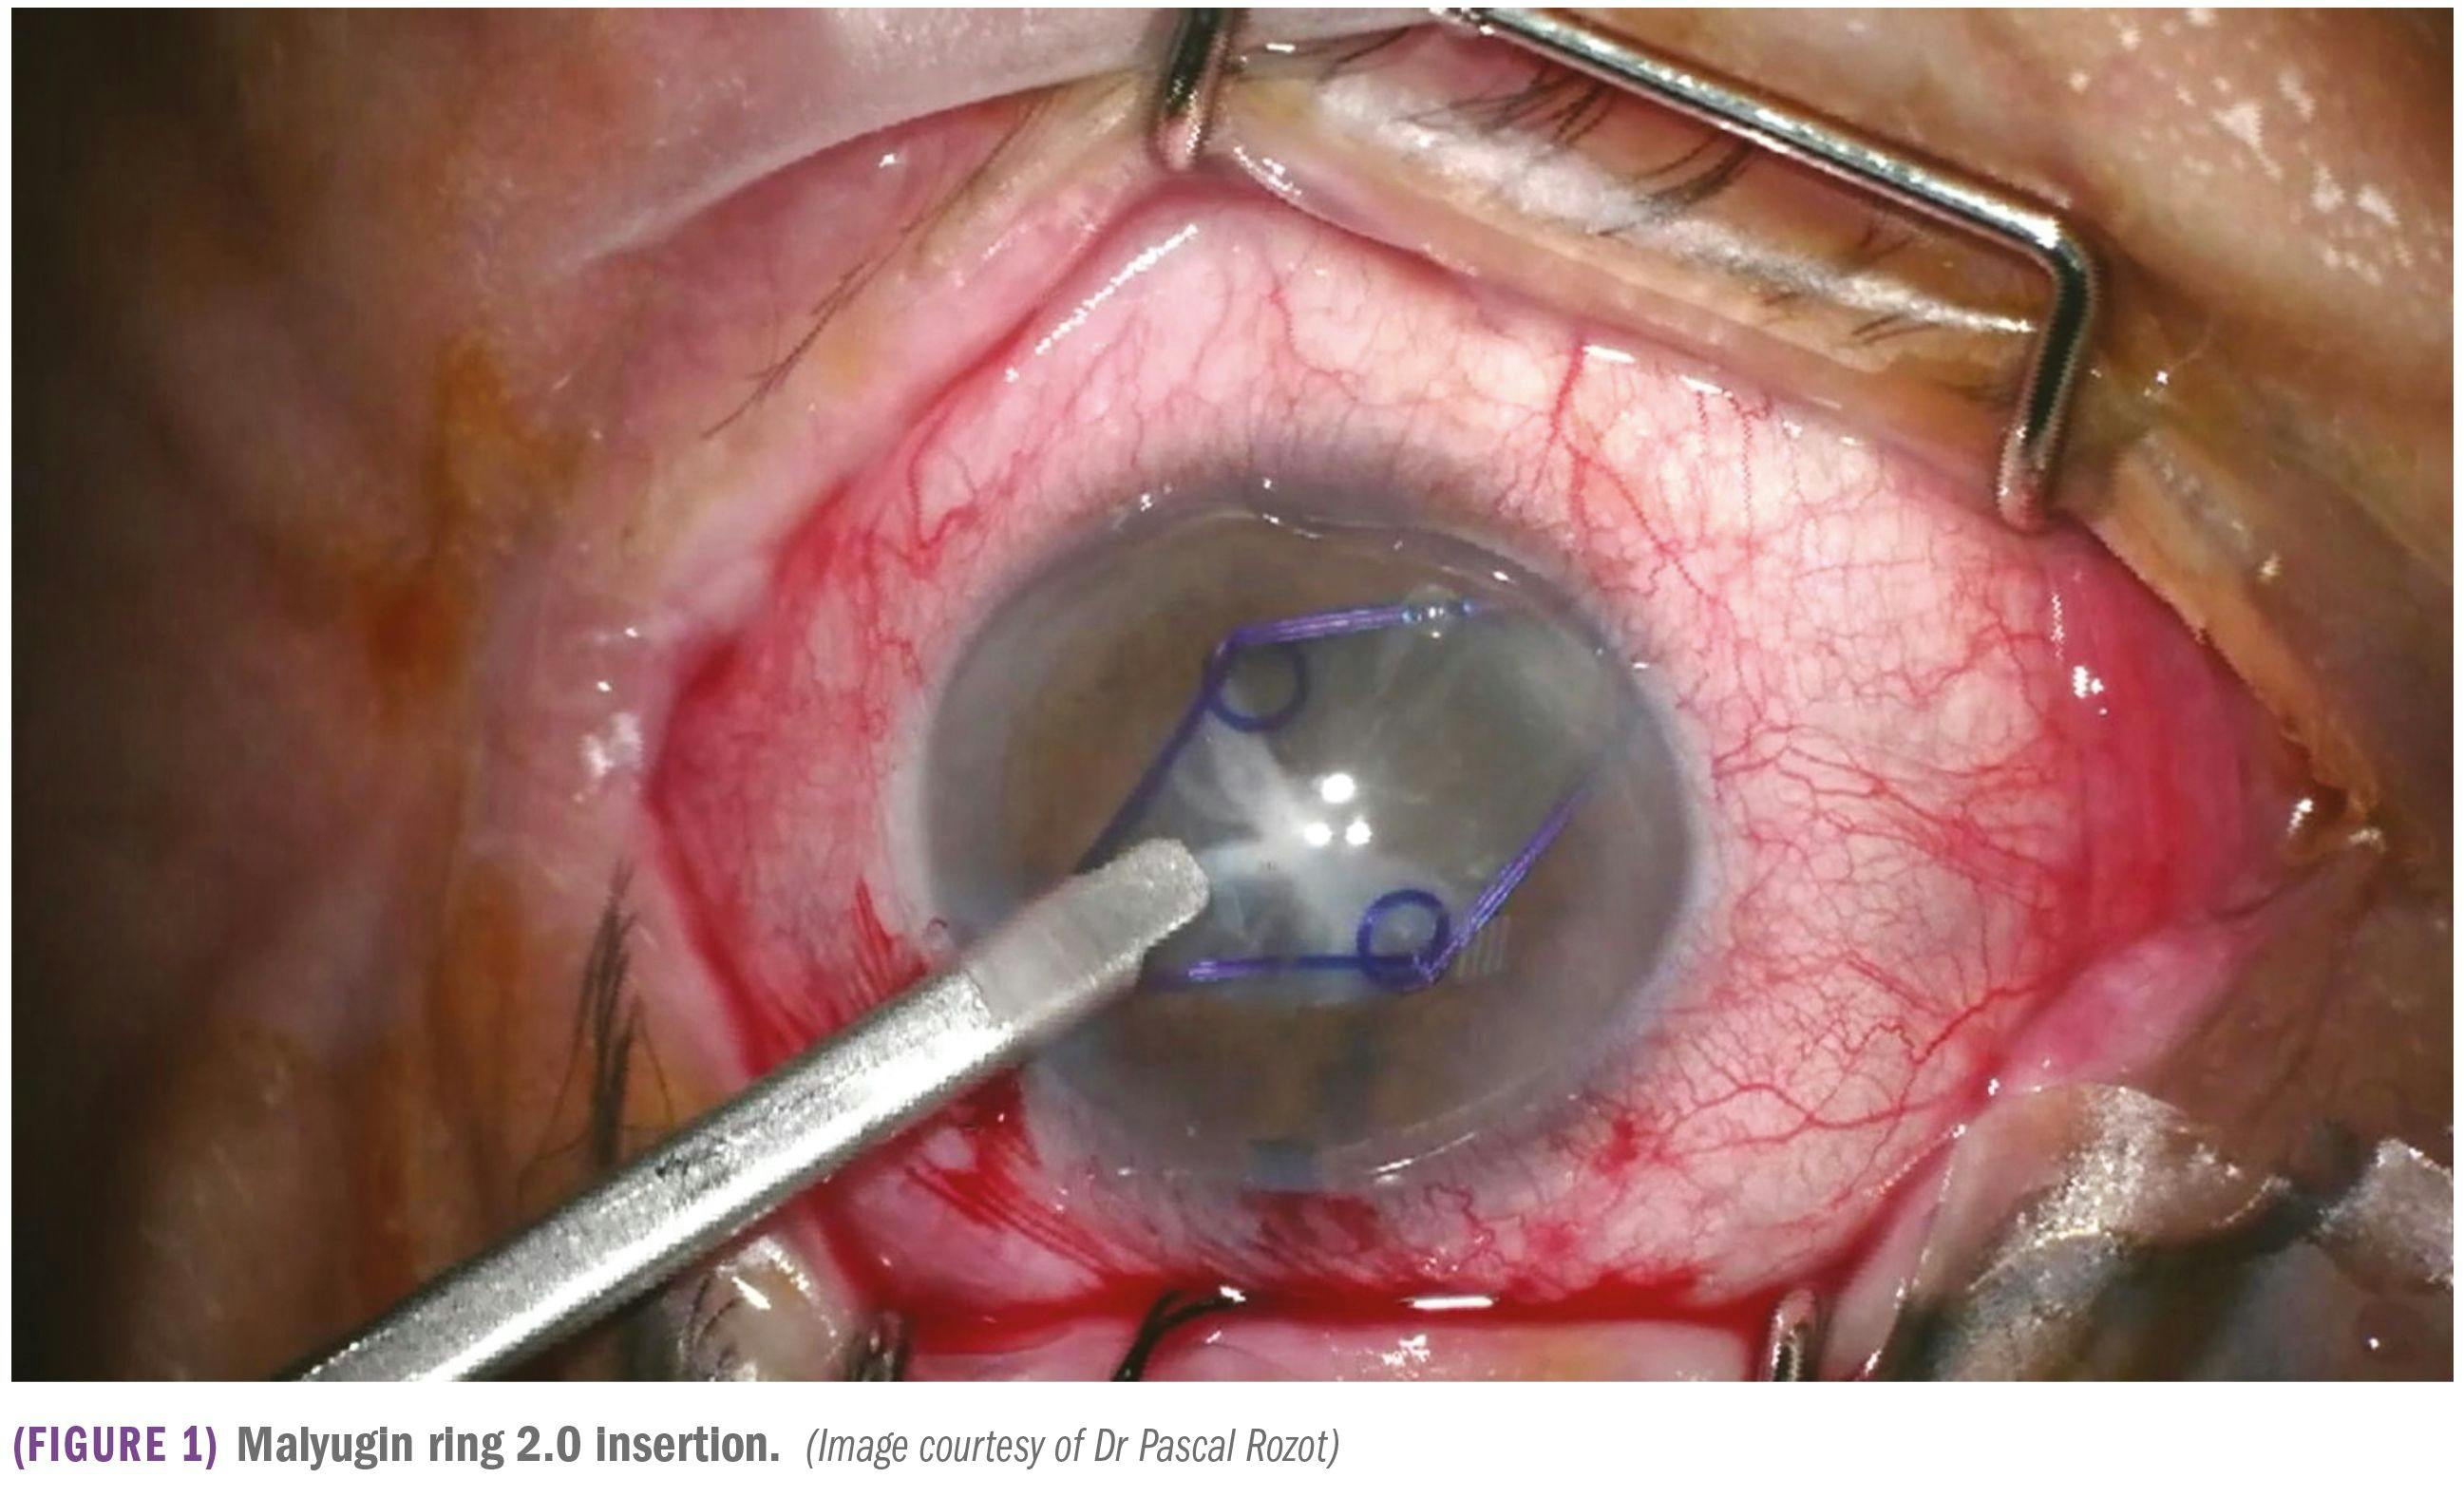 Malyugin ring 2.0 insertion during cataract surgery